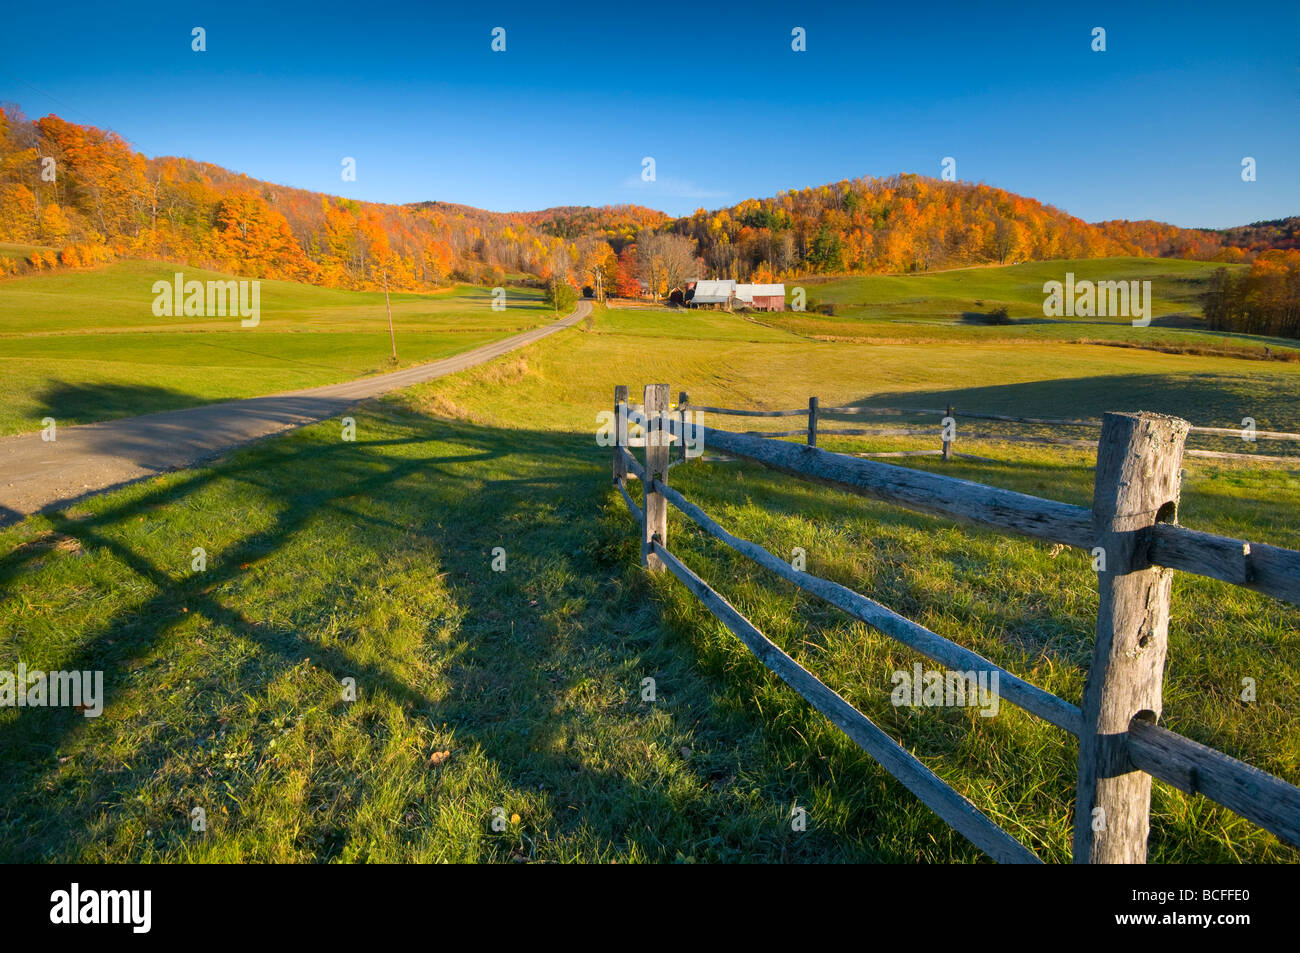 USA, Vermont, nr Woodstock, Jenne Farm Stock Photo